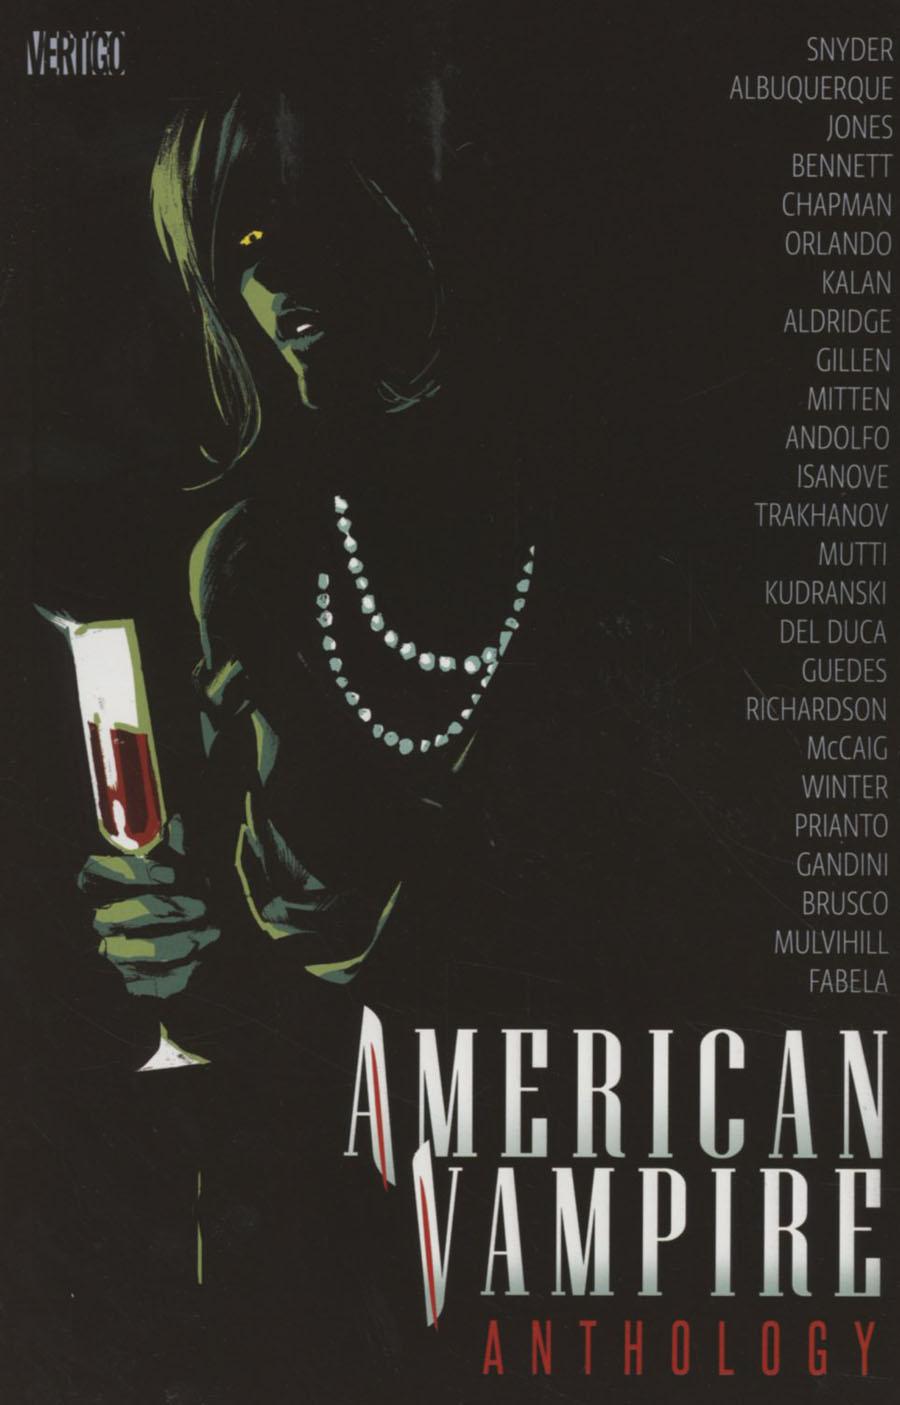 American Vampire Anthology Vol. 1 #2